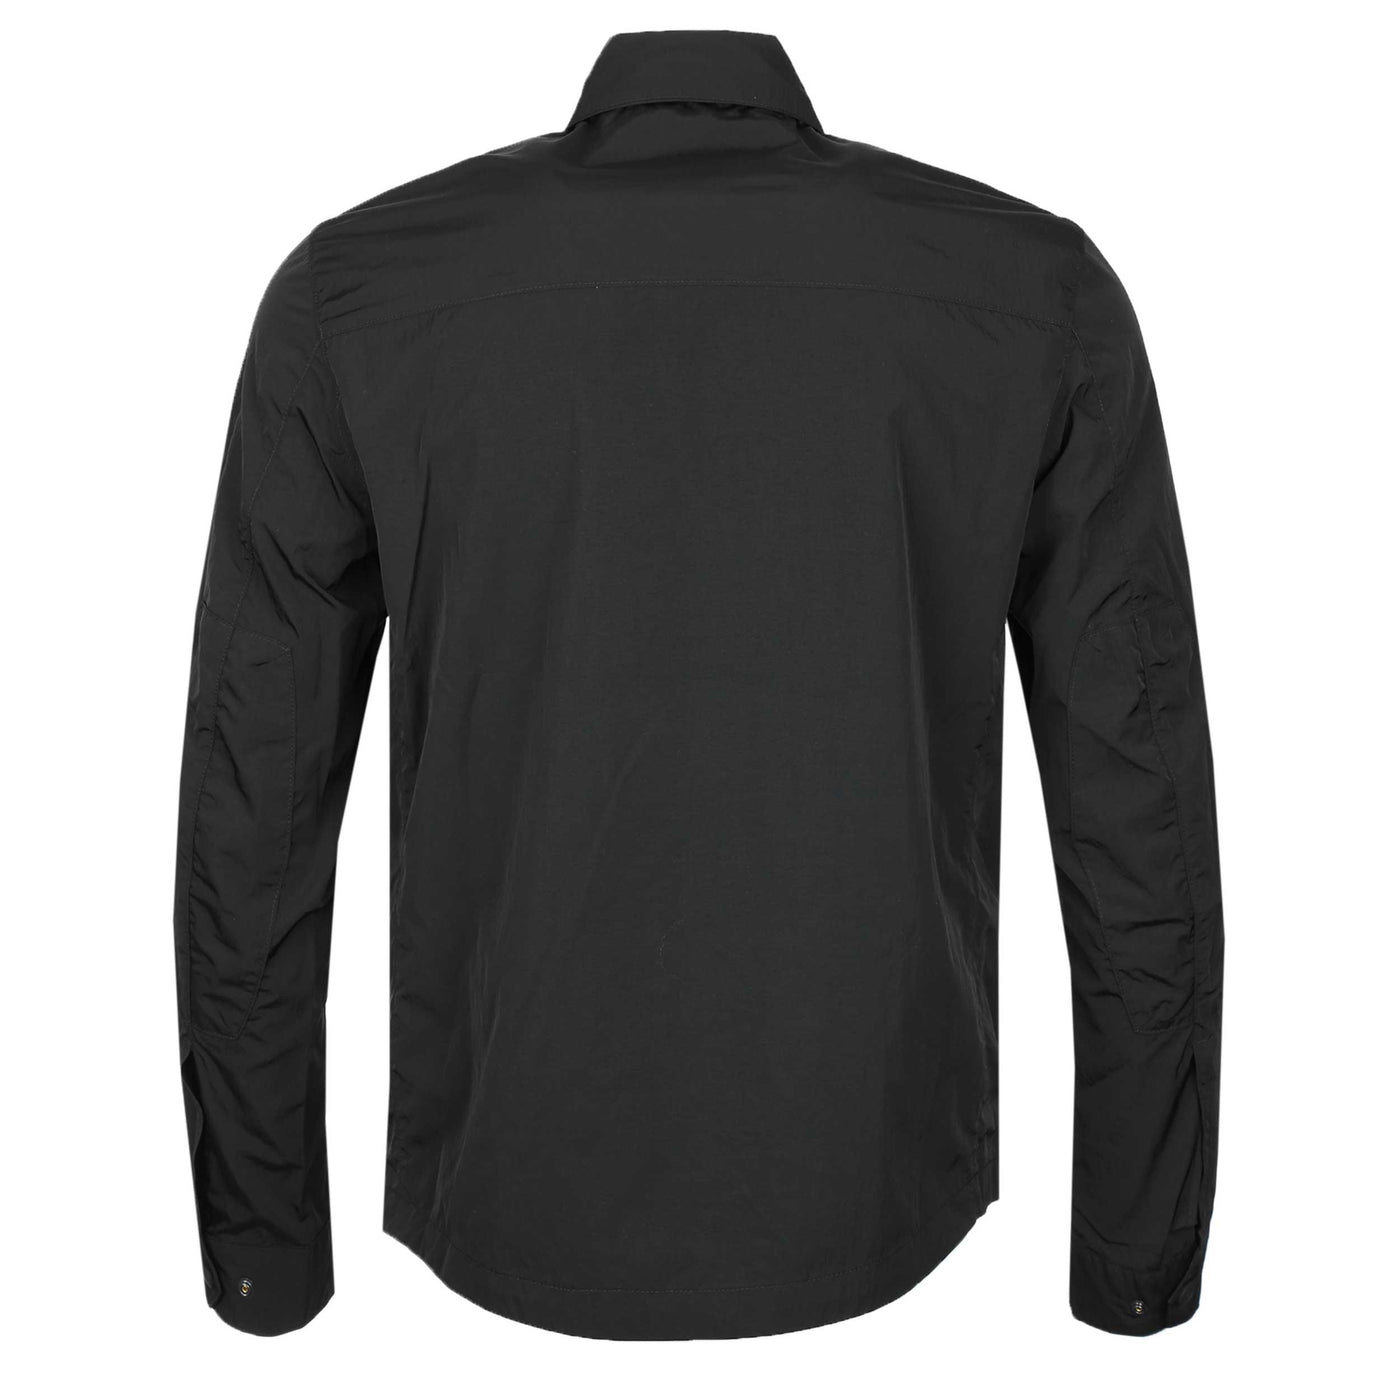 Belstaff Rift Overshirt in Black Back